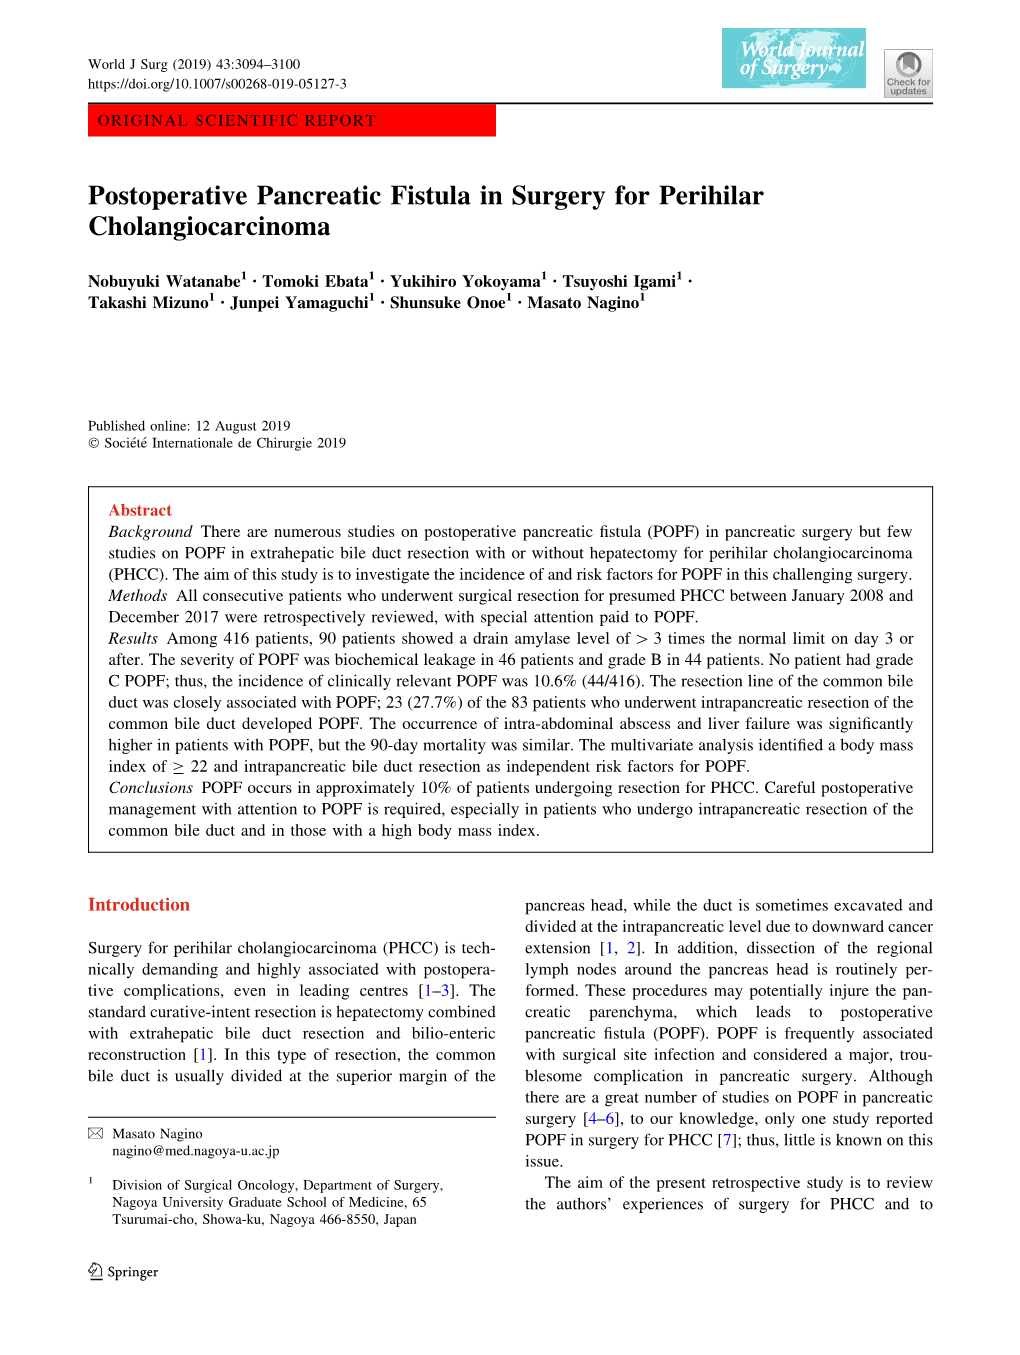 Postoperative Pancreatic Fistula in Surgery for Perihilar Cholangiocarcinoma